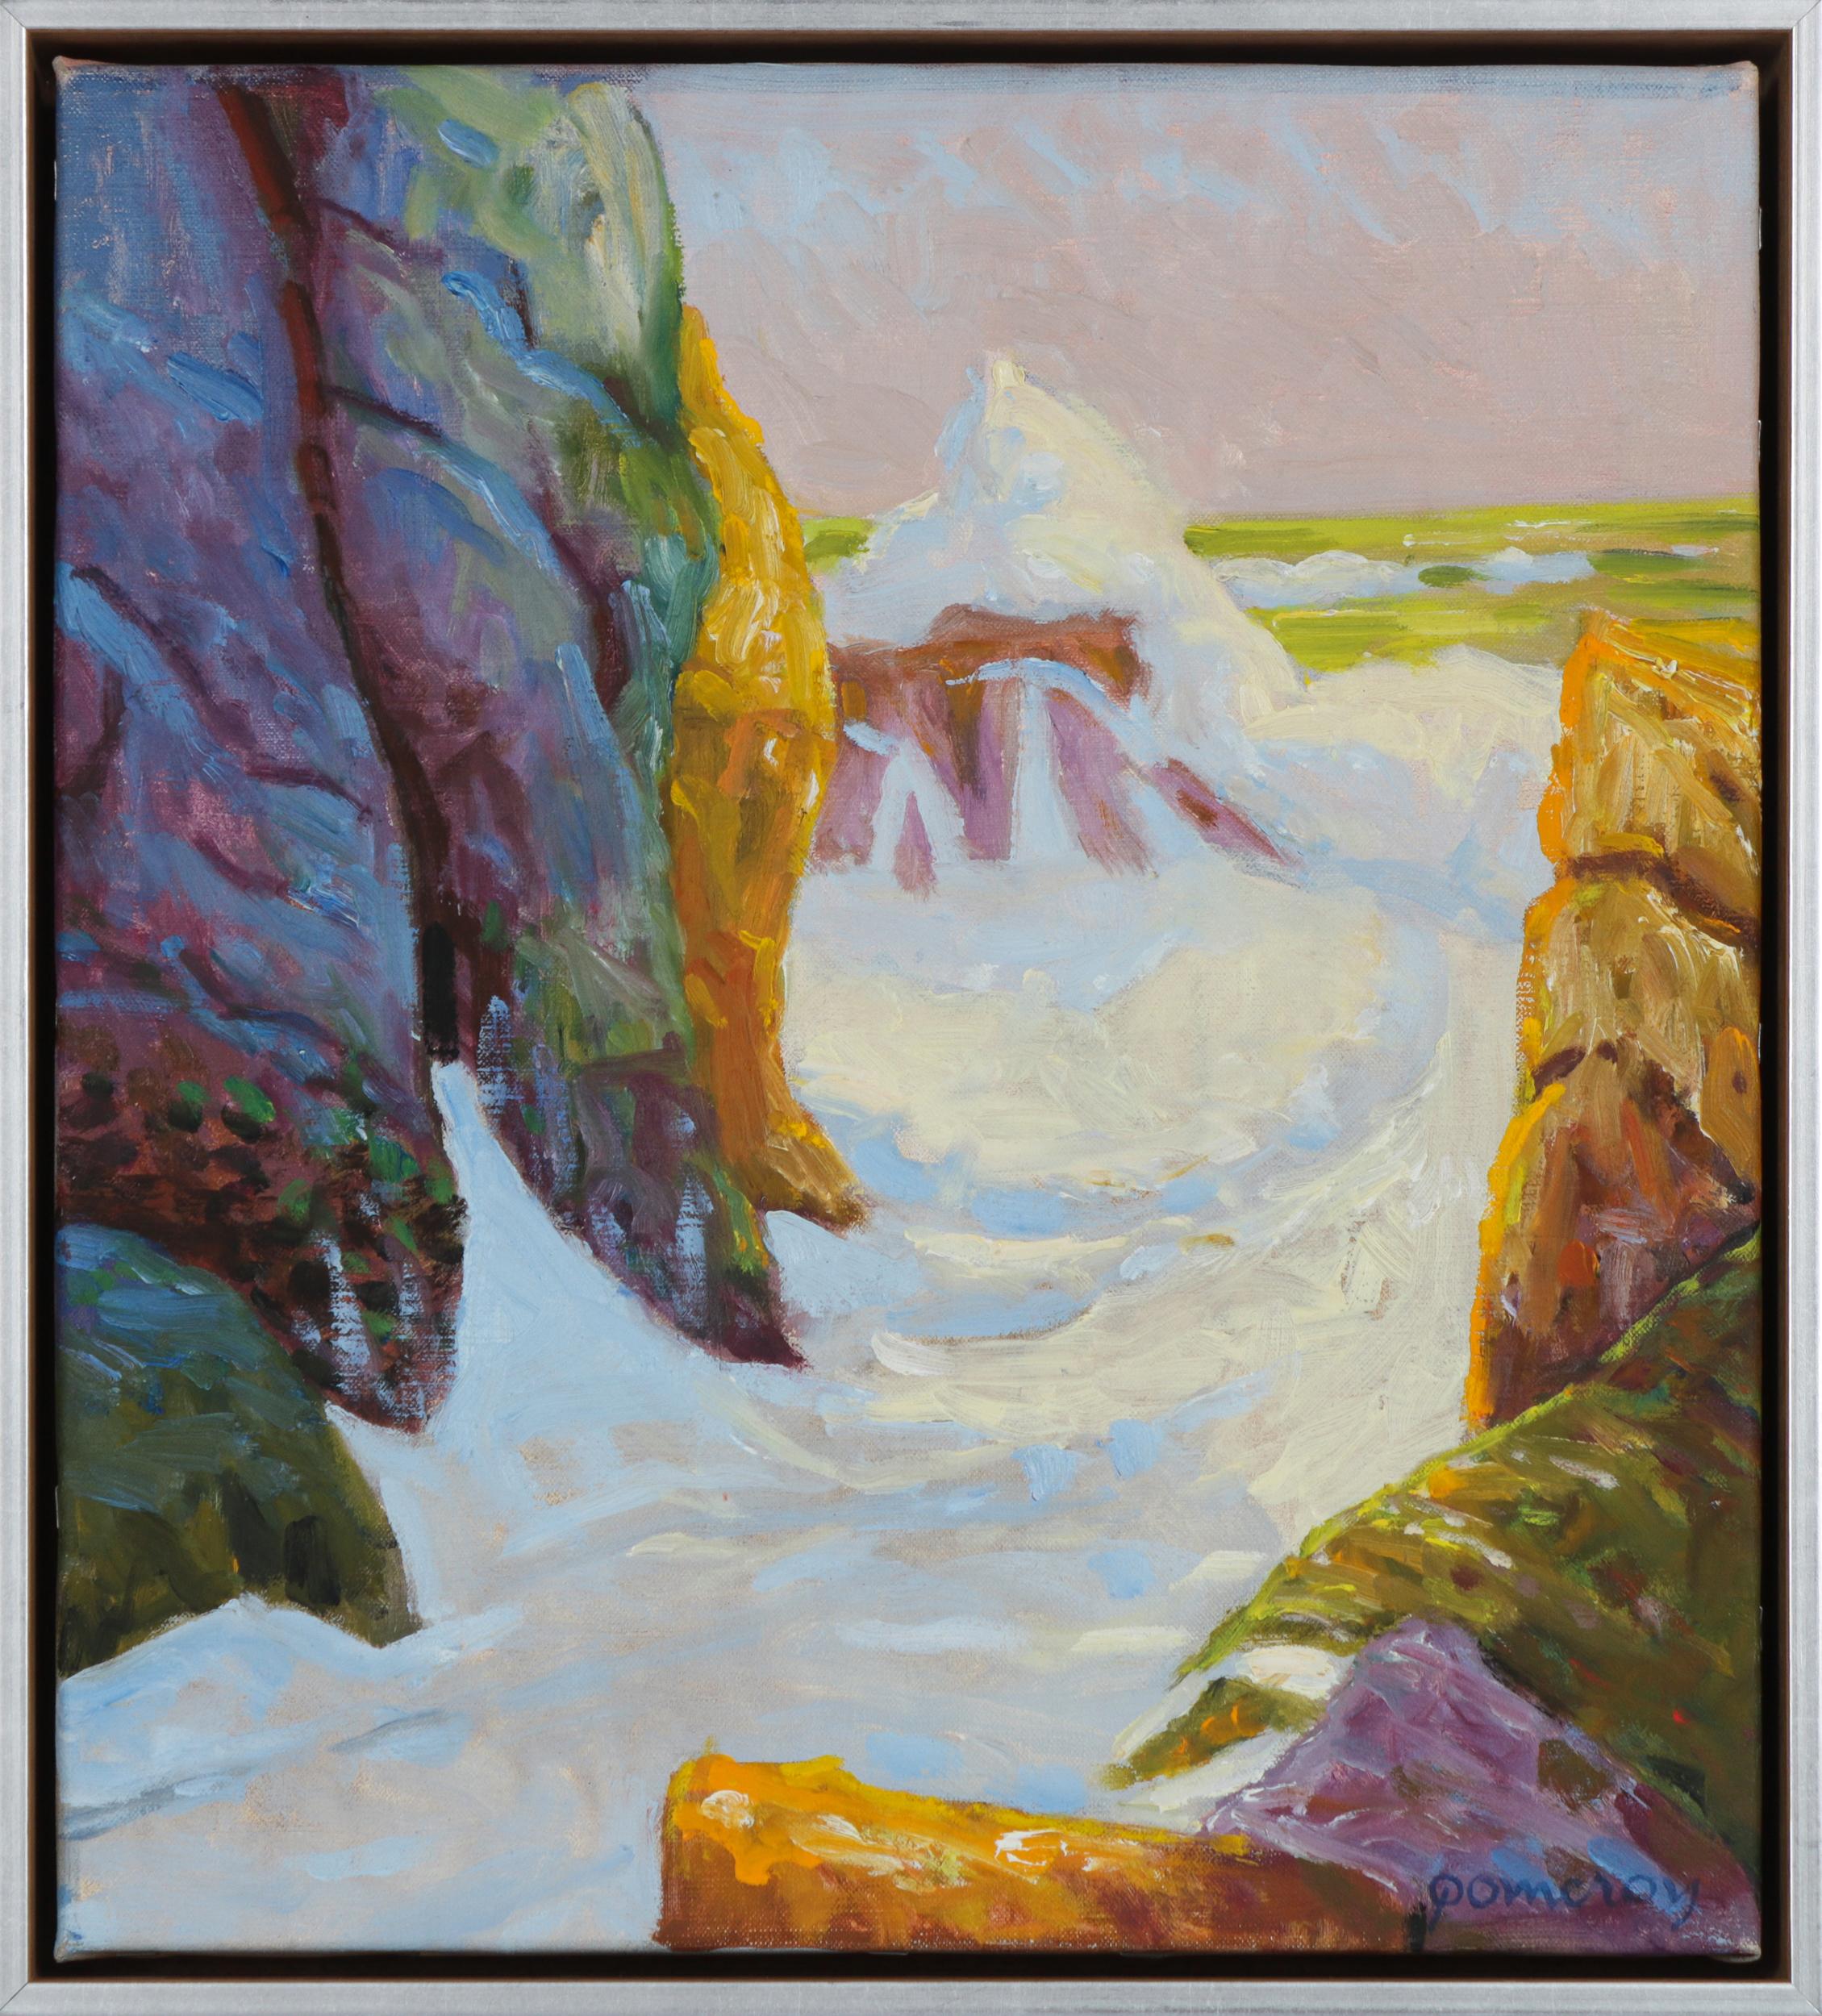 Frederick Pomeroy Landscape Painting - Coastal Rocks & Waves Mid - Late 20th Century Oil Painting